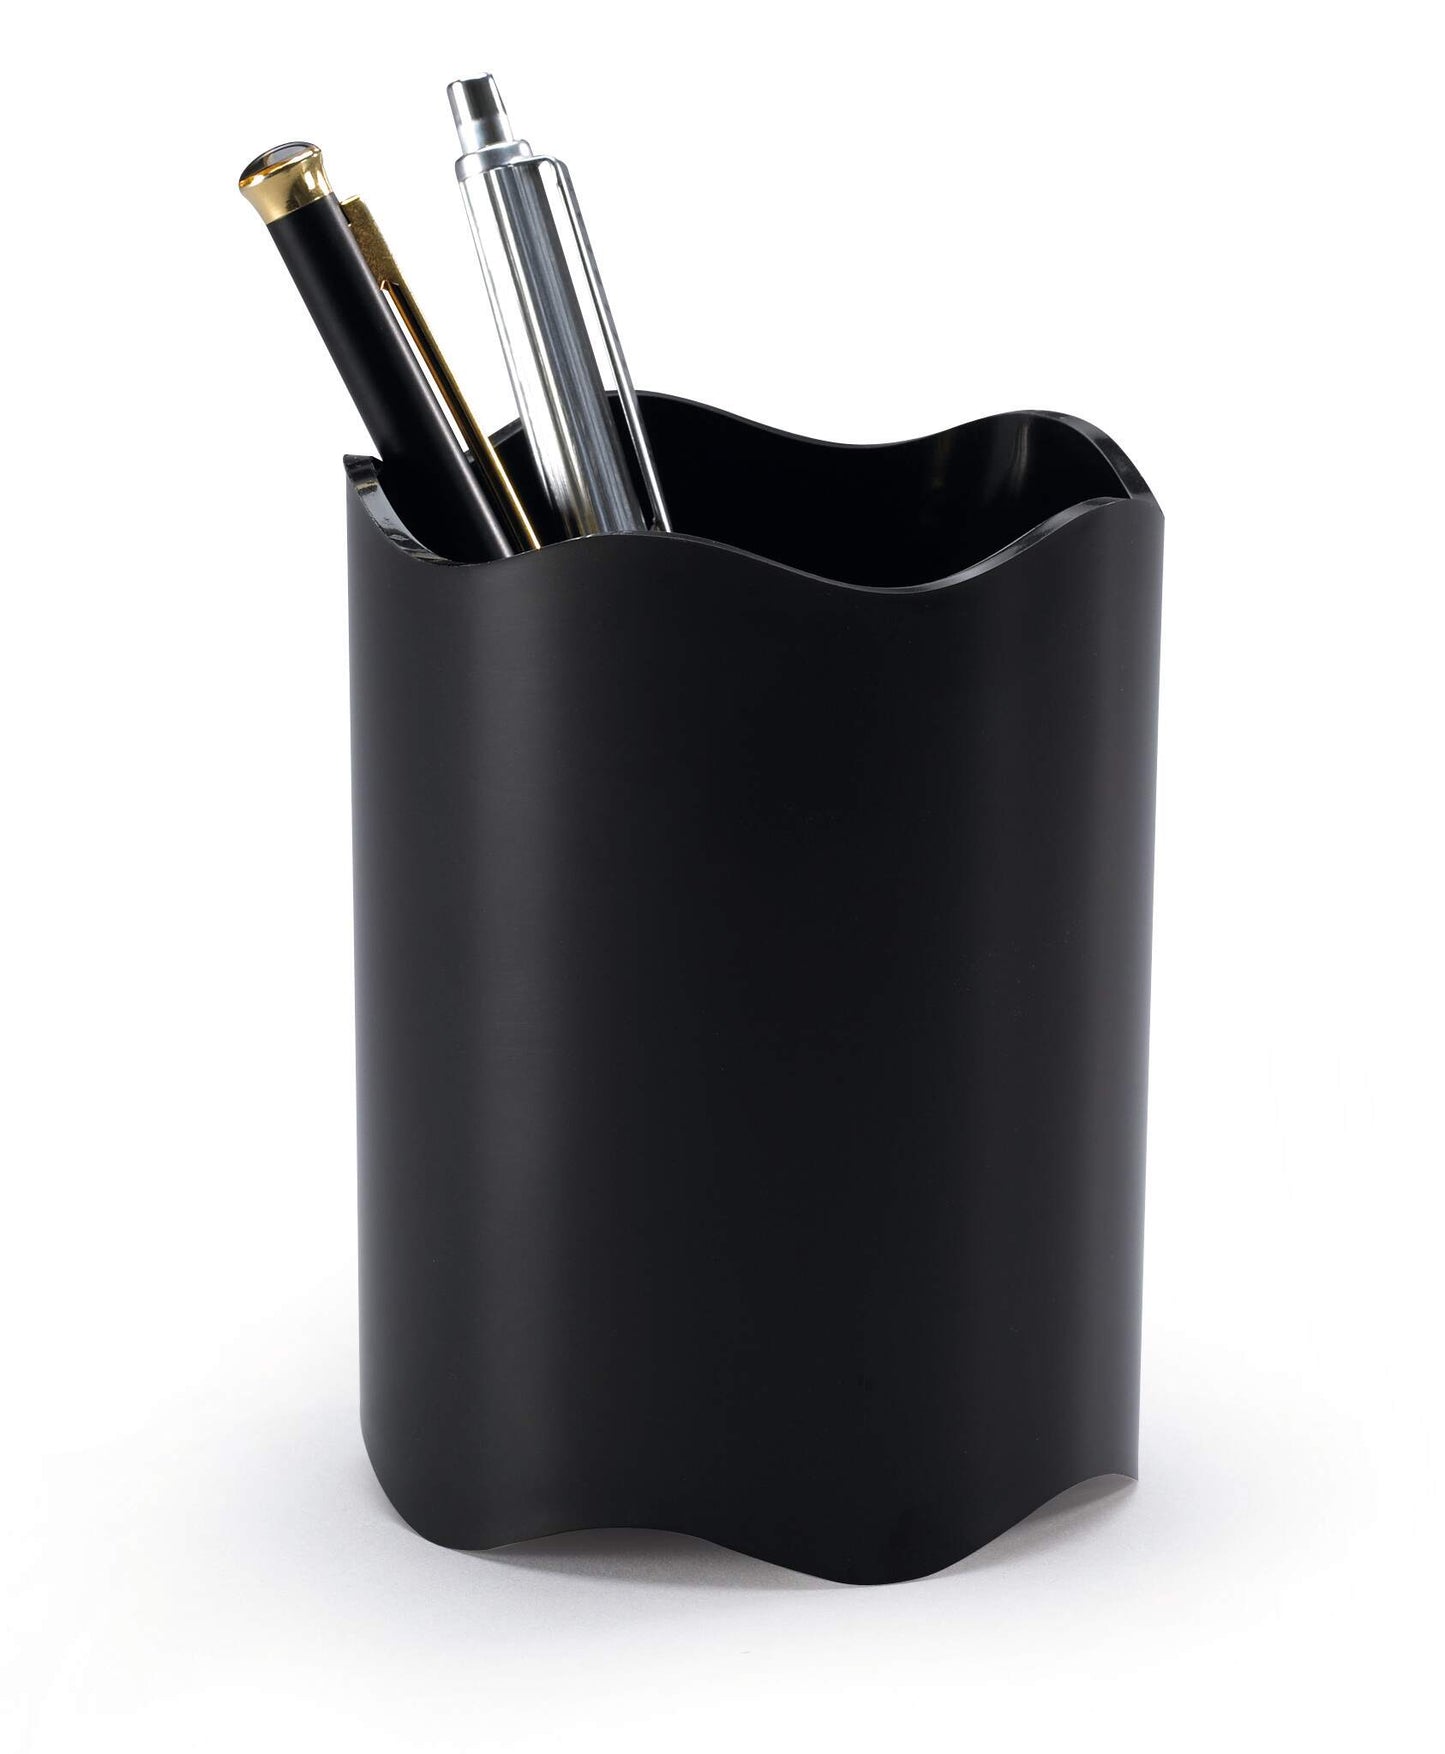 Durable TREND Pen Pot Pencil Holder Desk Tidy Organizer Cup | Black